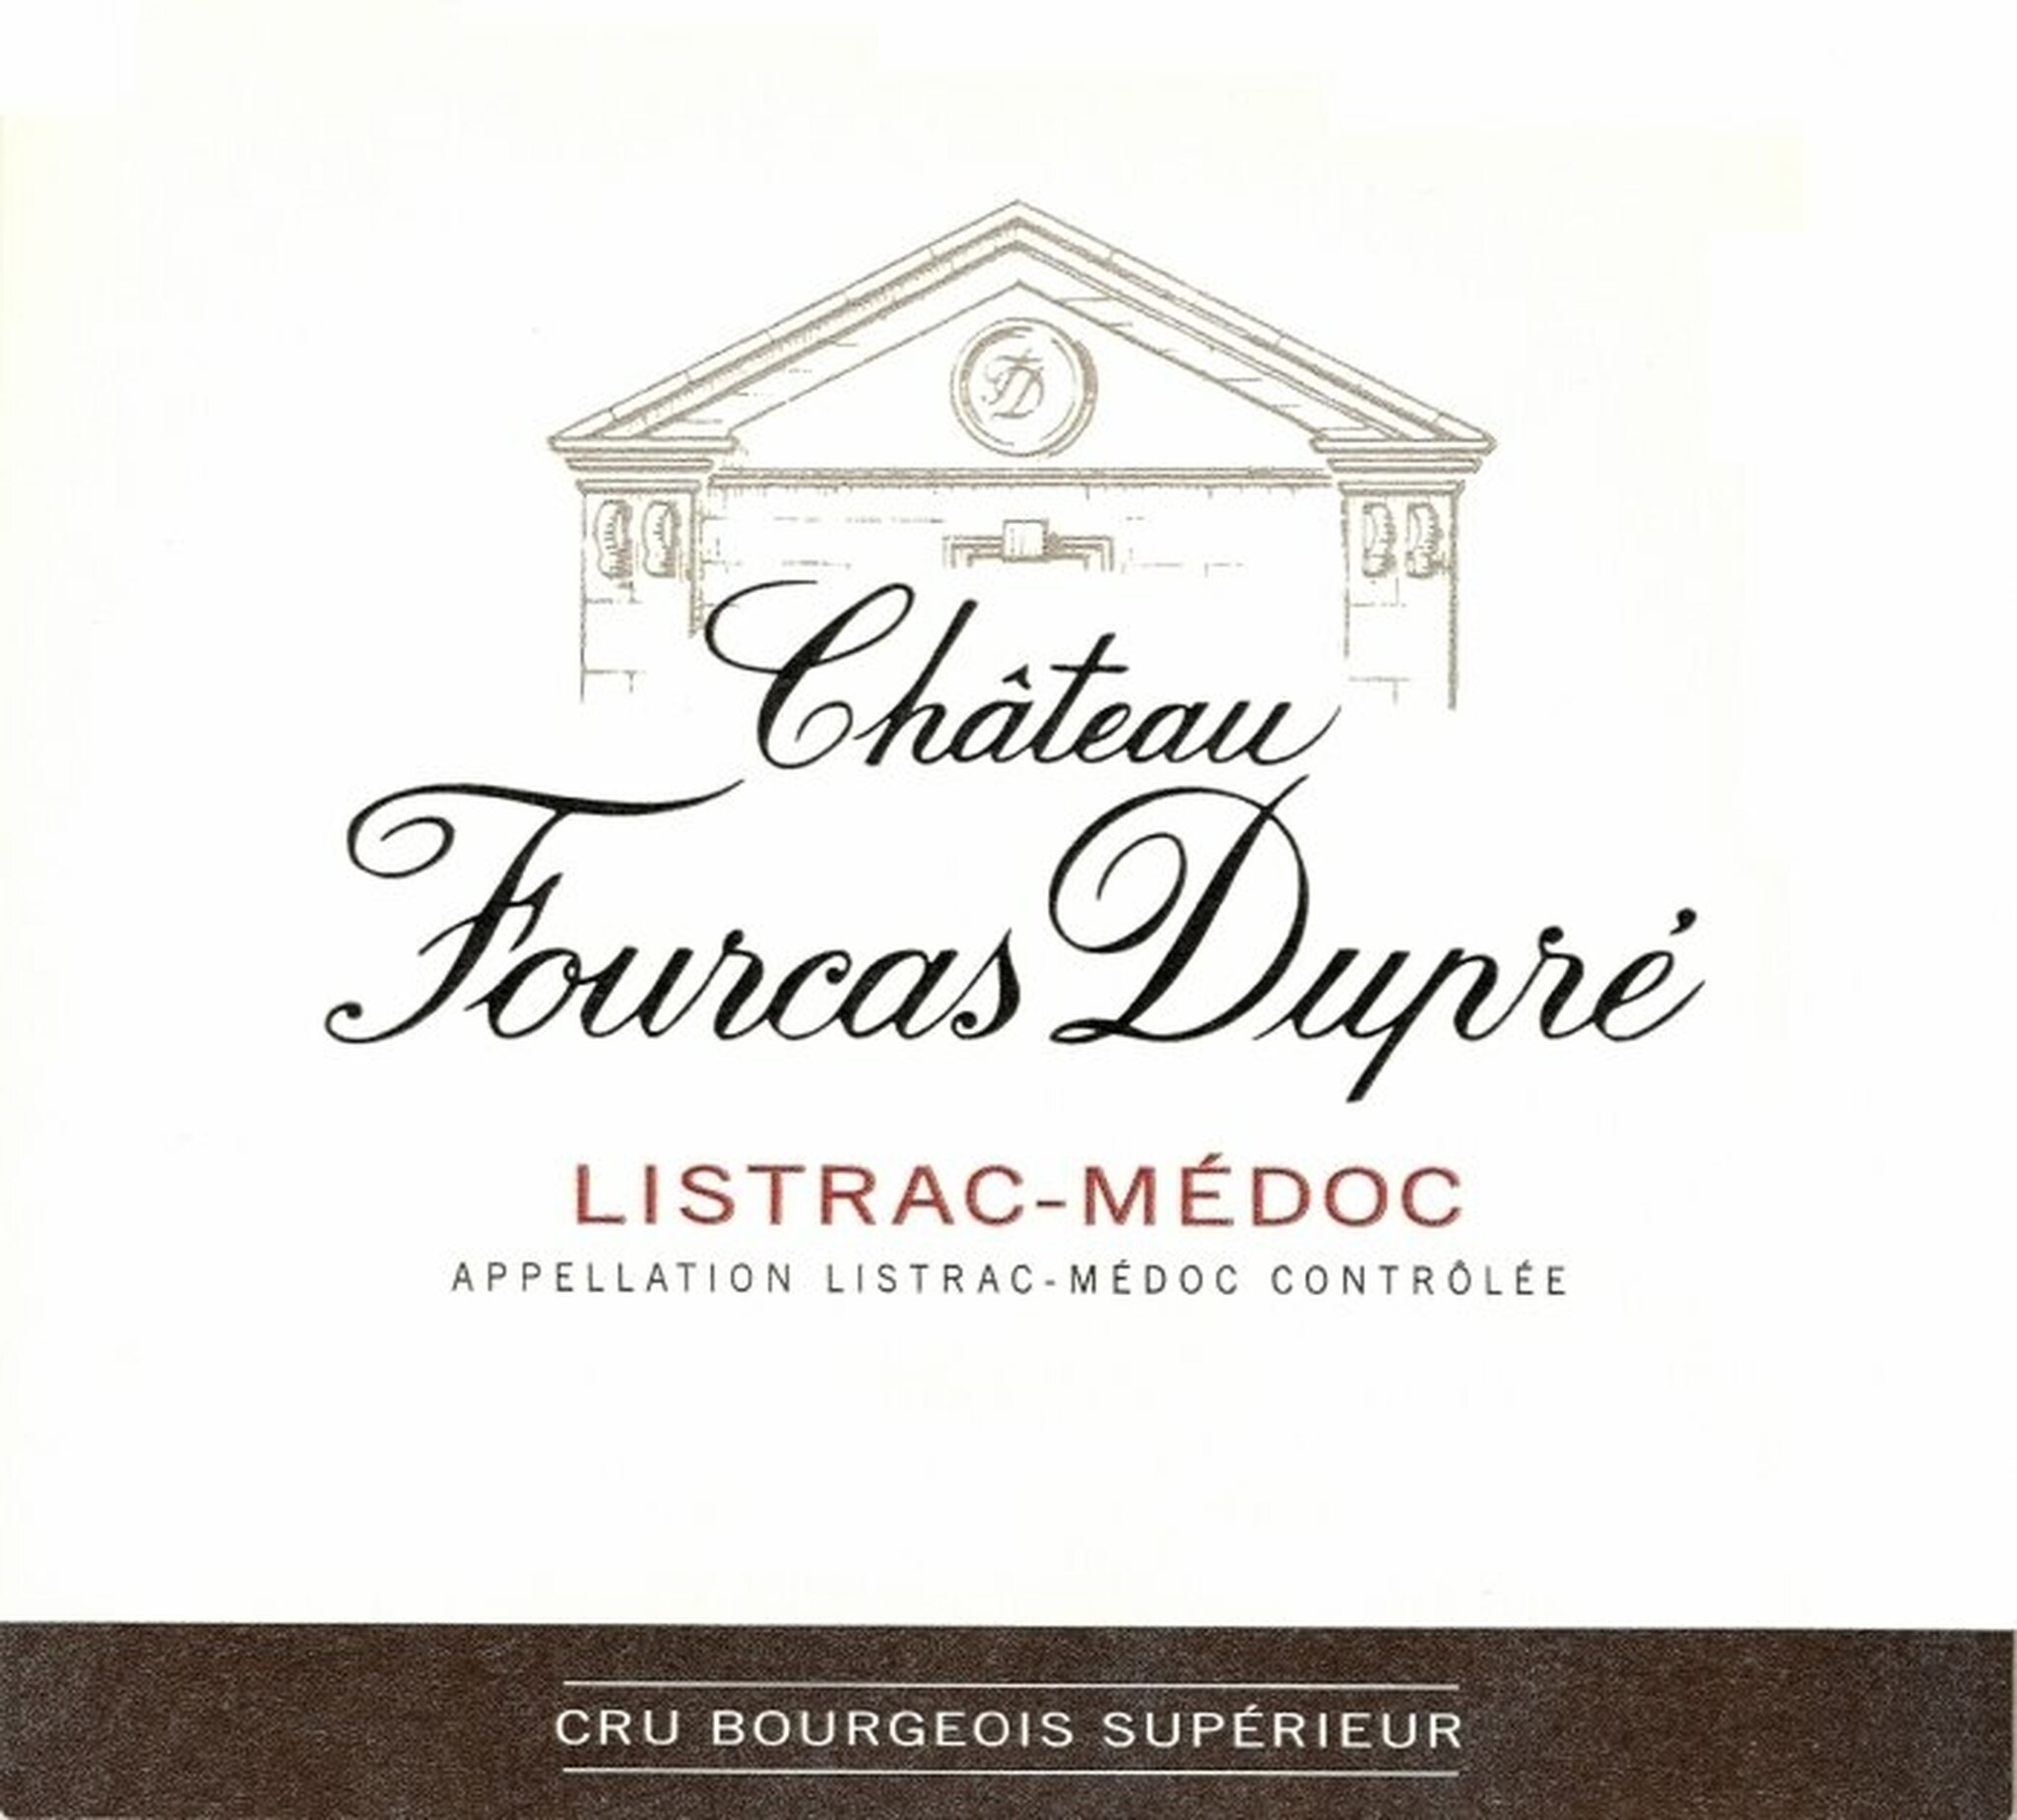 Fourcas Dupre, Bordeaux, Listrac Medoc, France, AOC, Cru Bourgeois